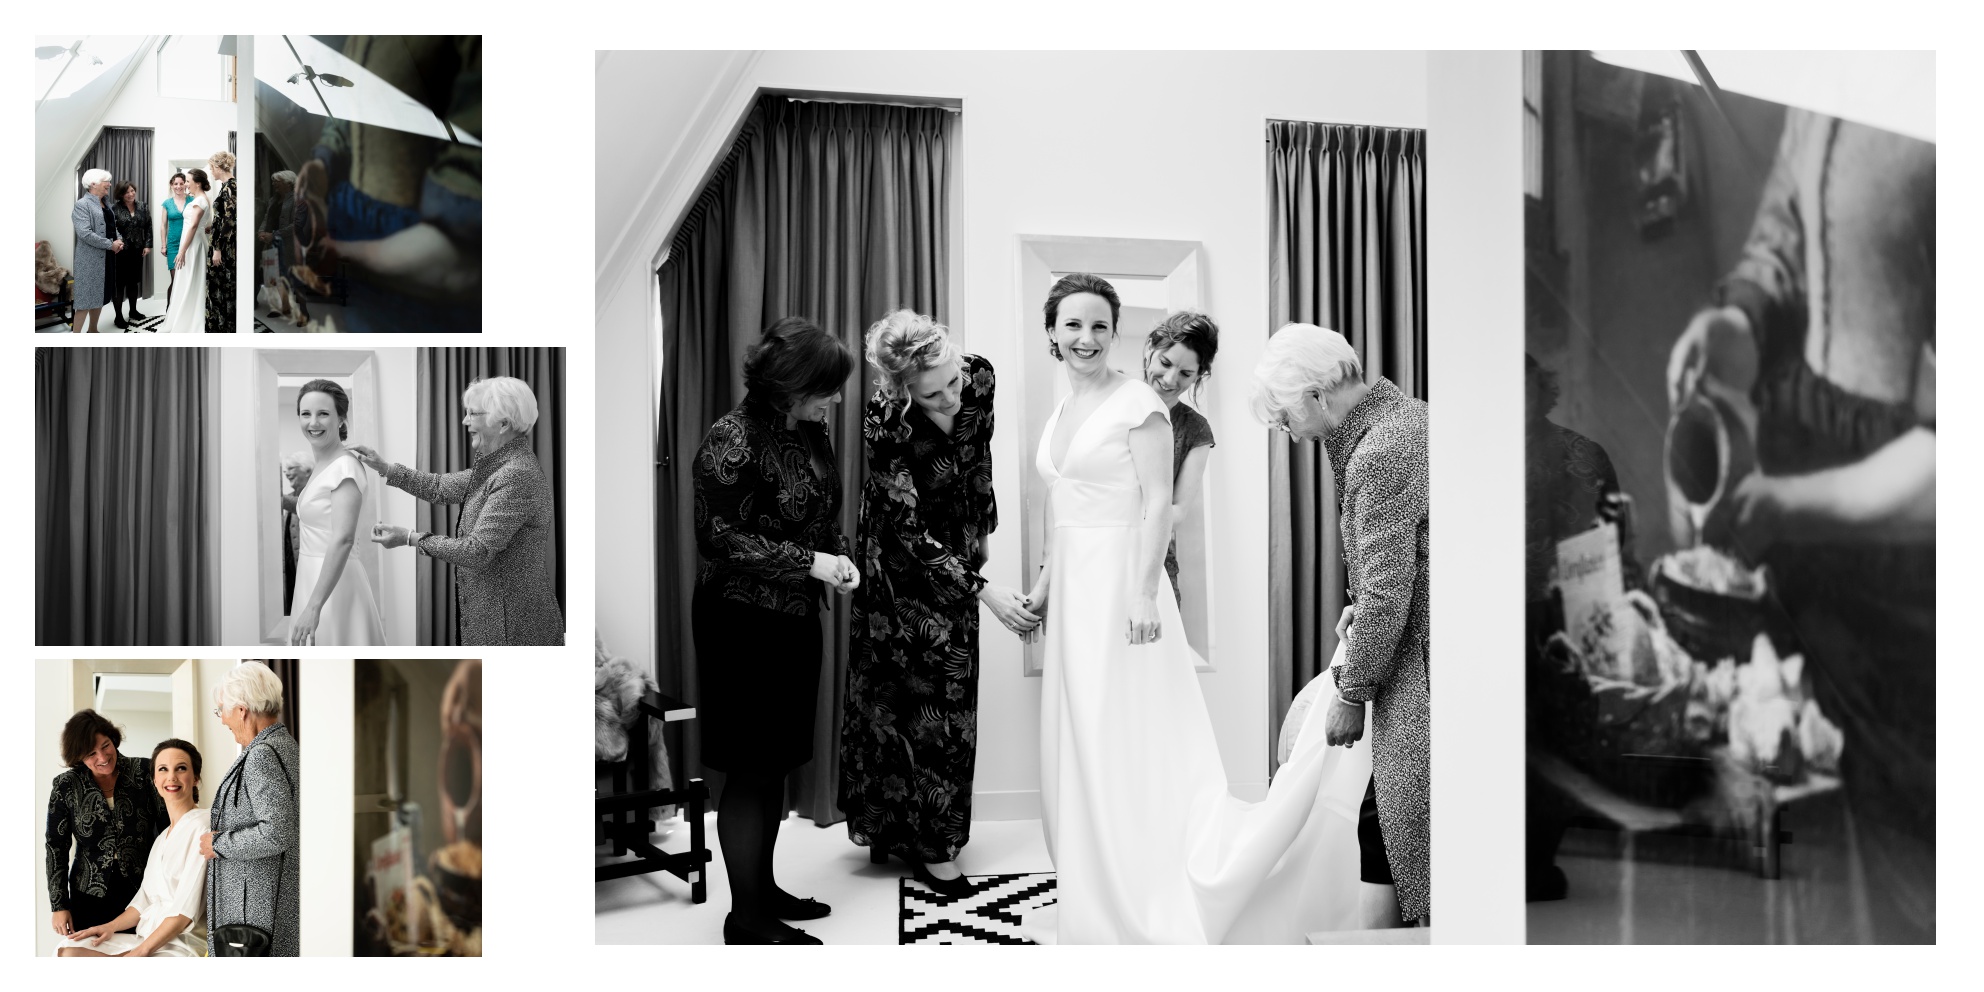 Bruidsfotograaf Trouwfotograaf huwelijksfotograaf trouwreportage bruidsfotograaf huwelijksreportage trouwfotograaf heemstede Haarlem Noord-Holland Zalmiy Paeez fotogrfie